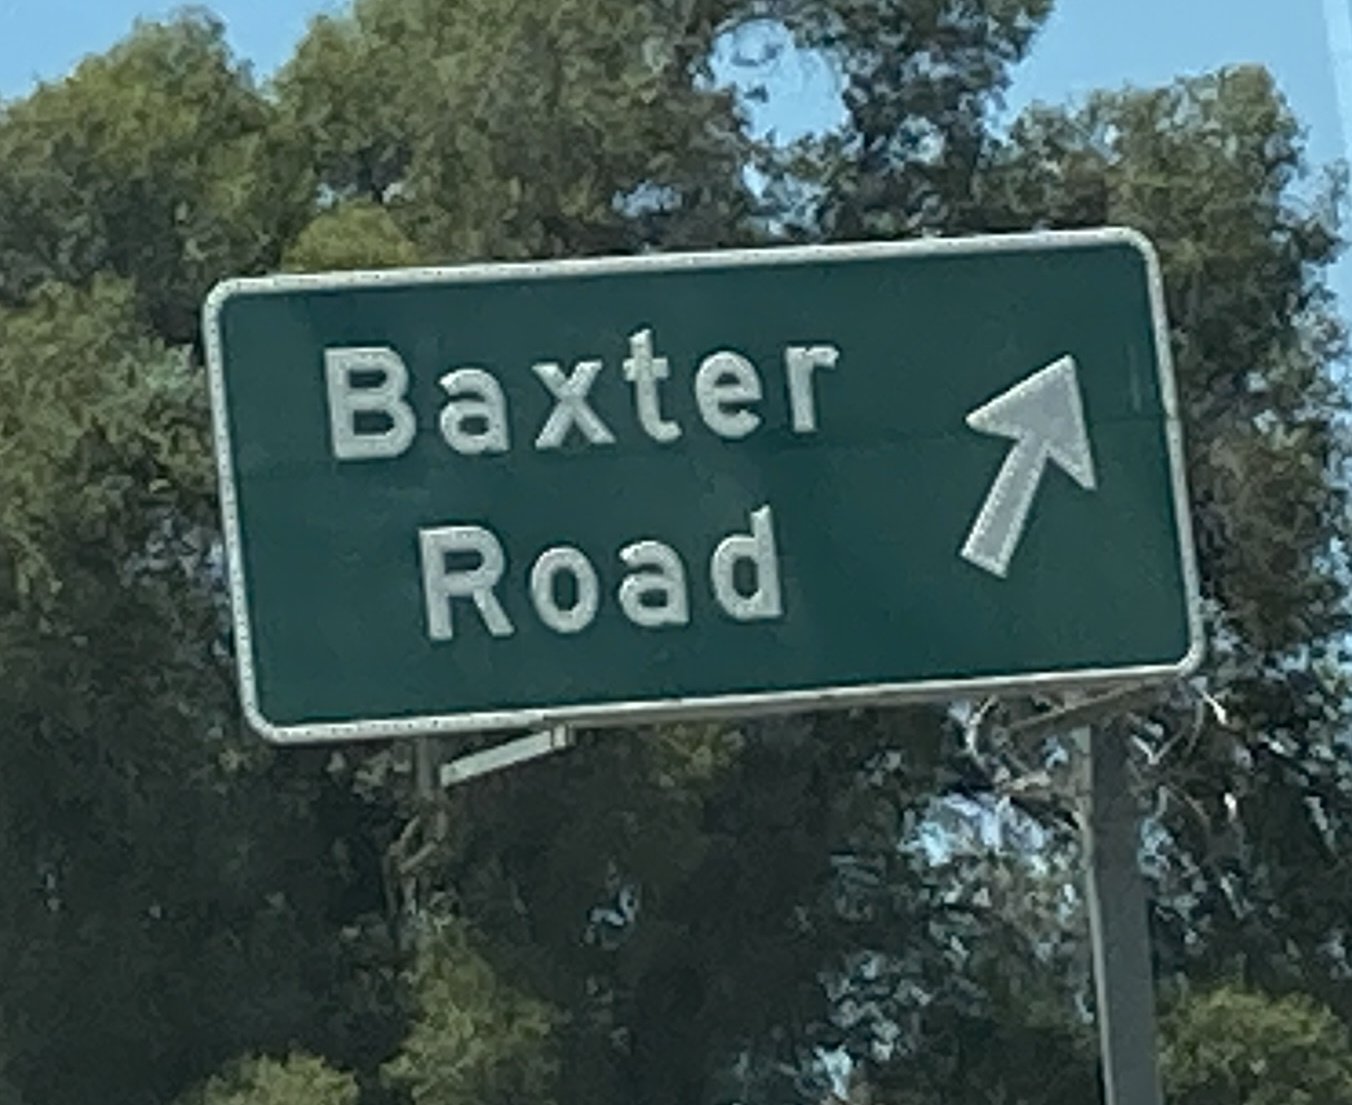 I15N/Baxter